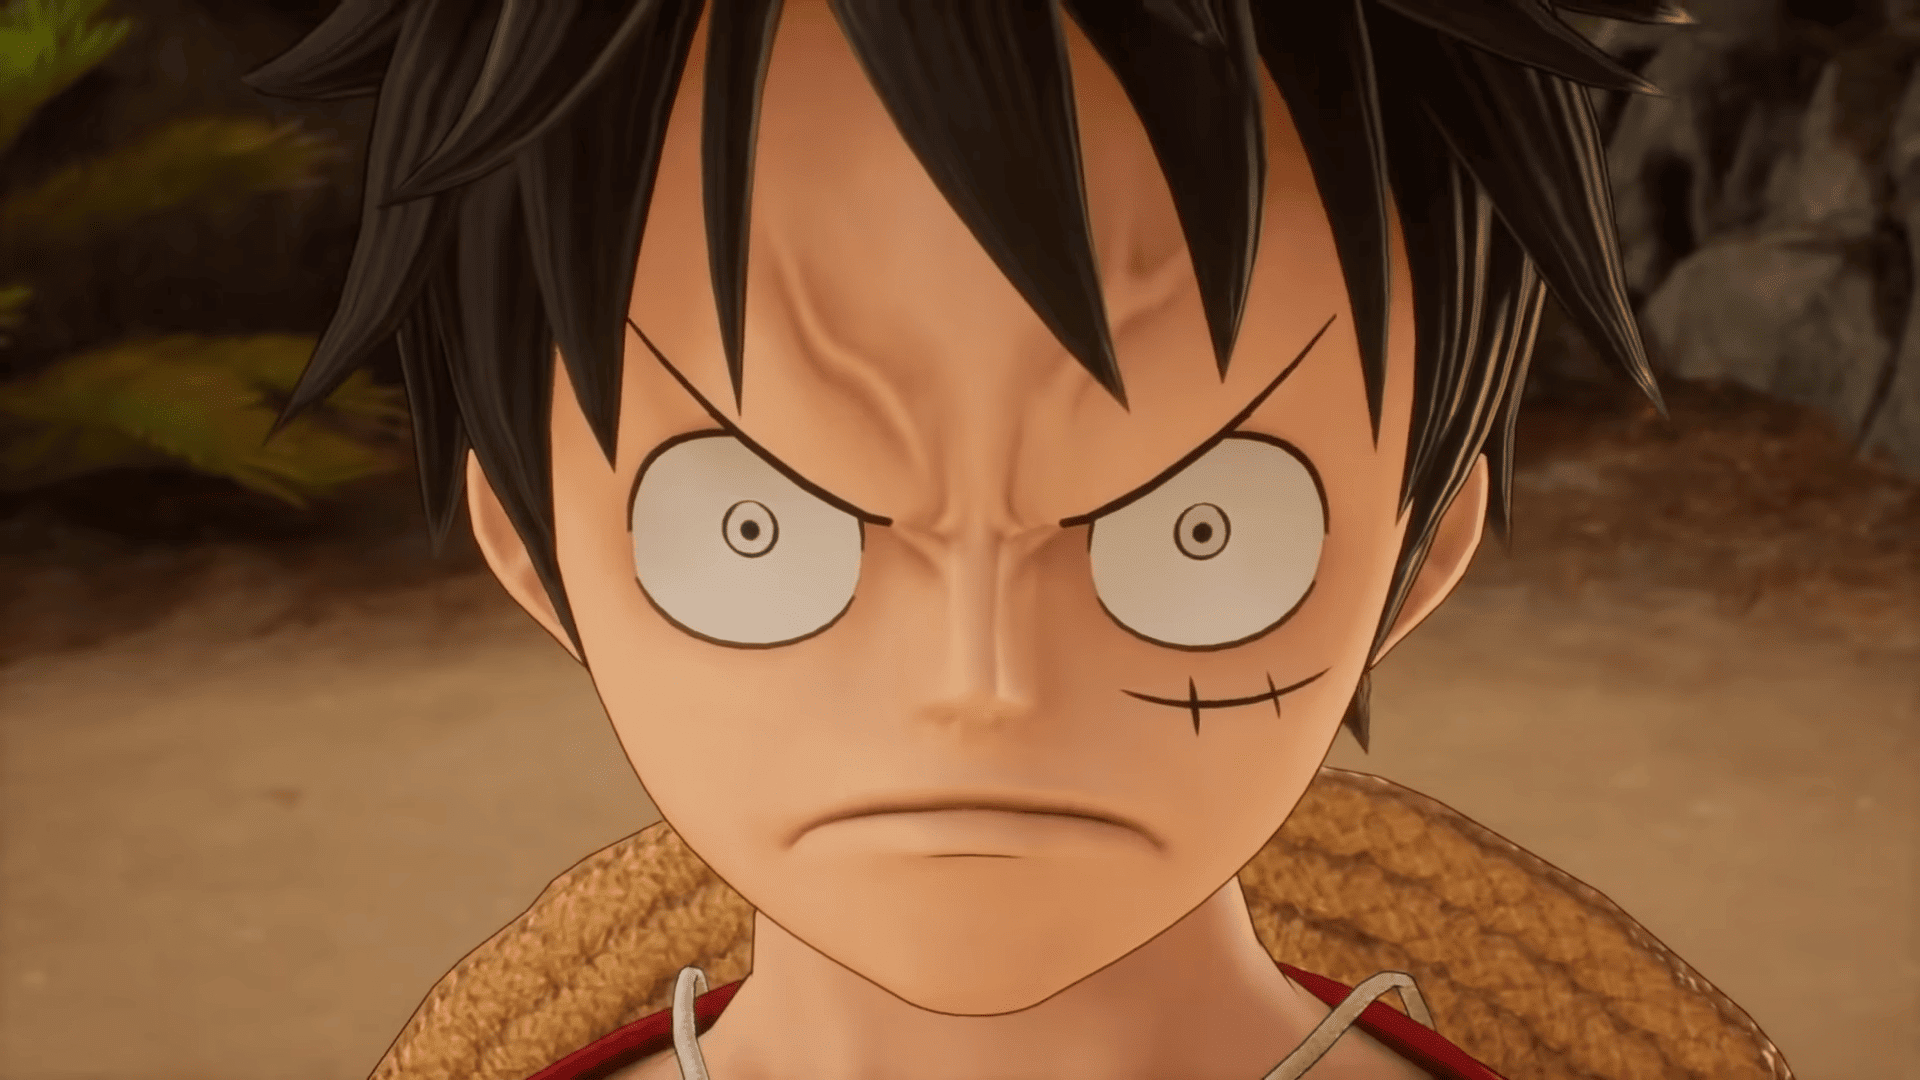 One Piece Odyssey gets a nostalgic launch trailer - Niche Gamer